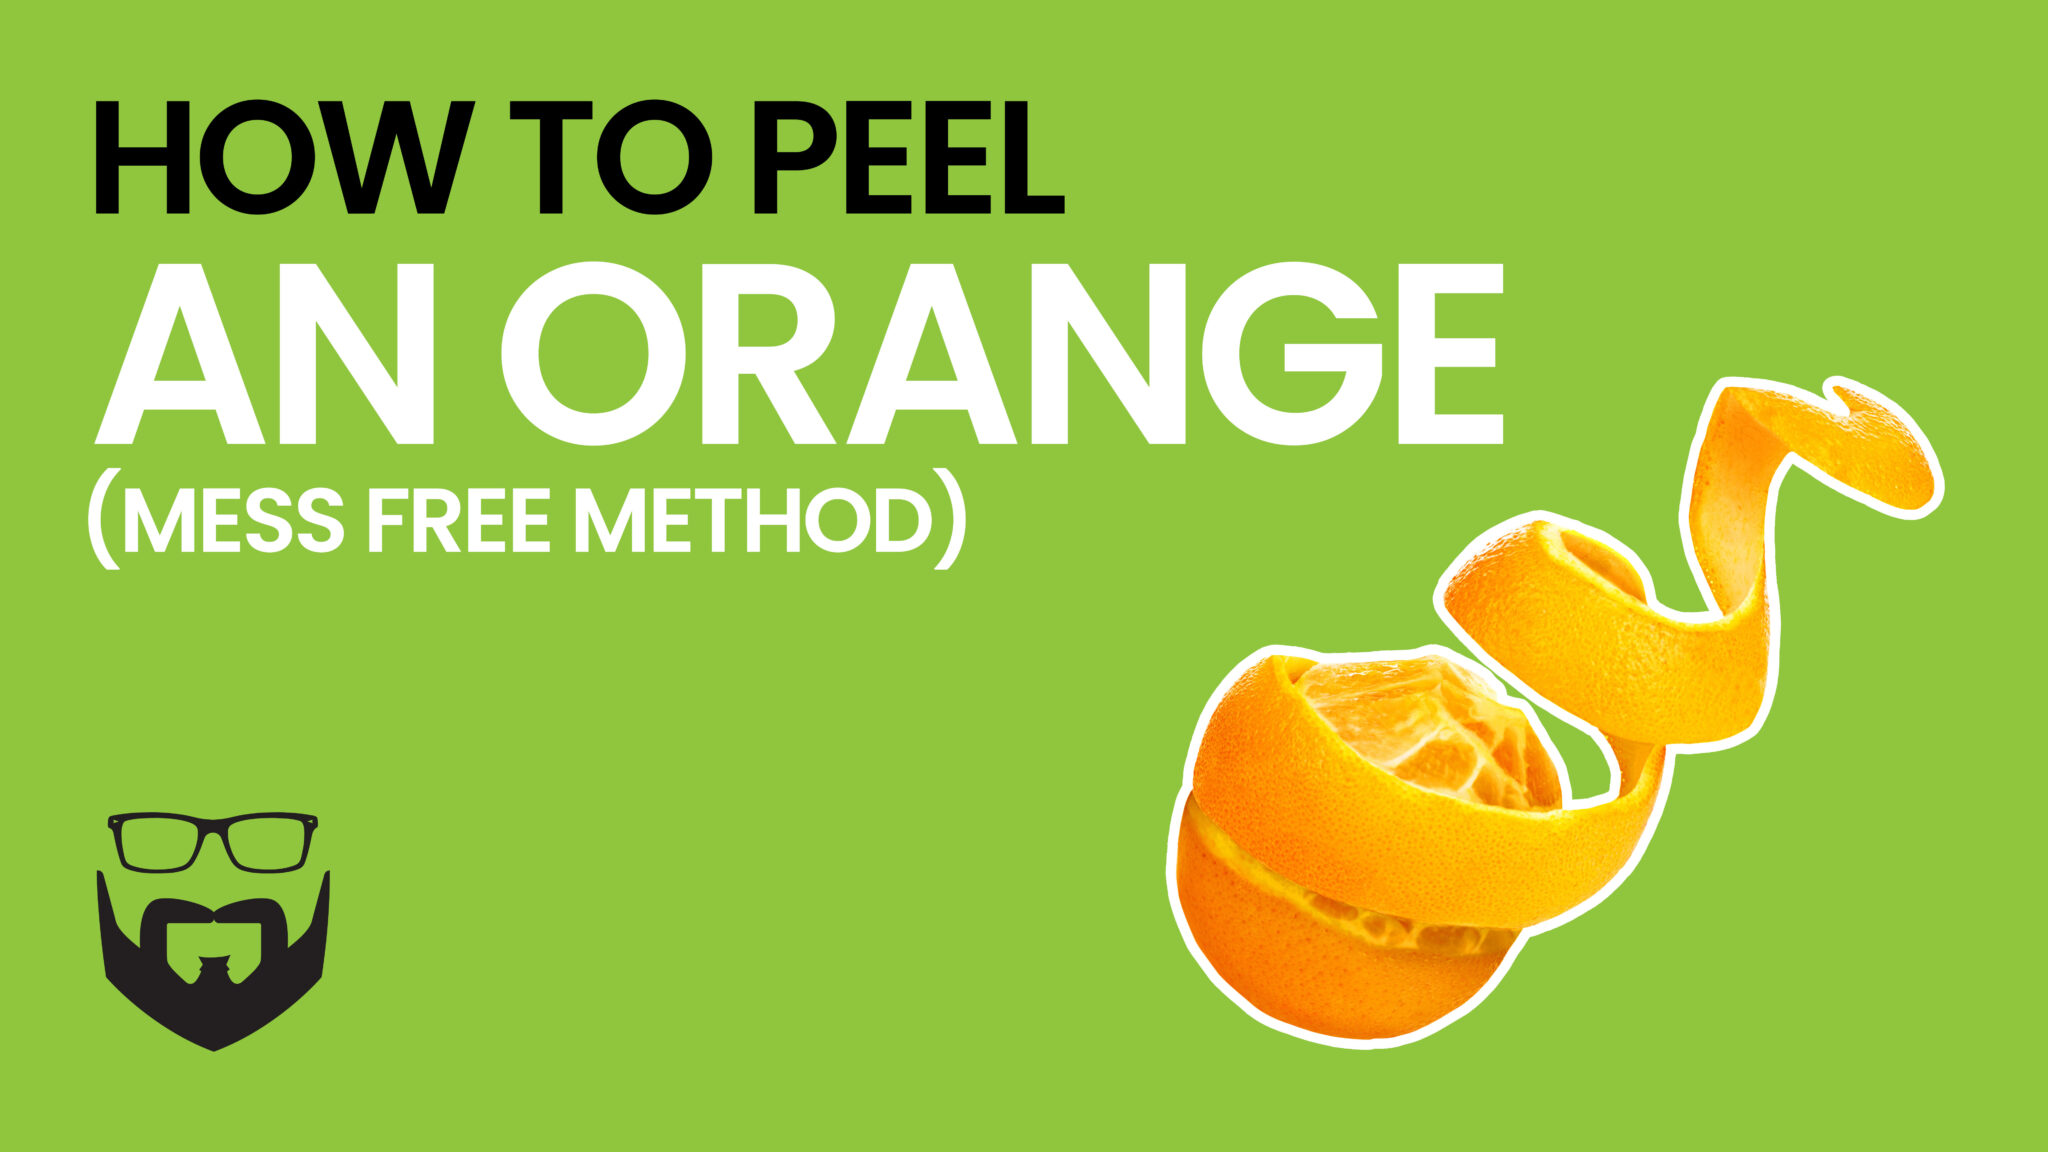 How to Peel an Orange (Mess Free Method) Video - Green